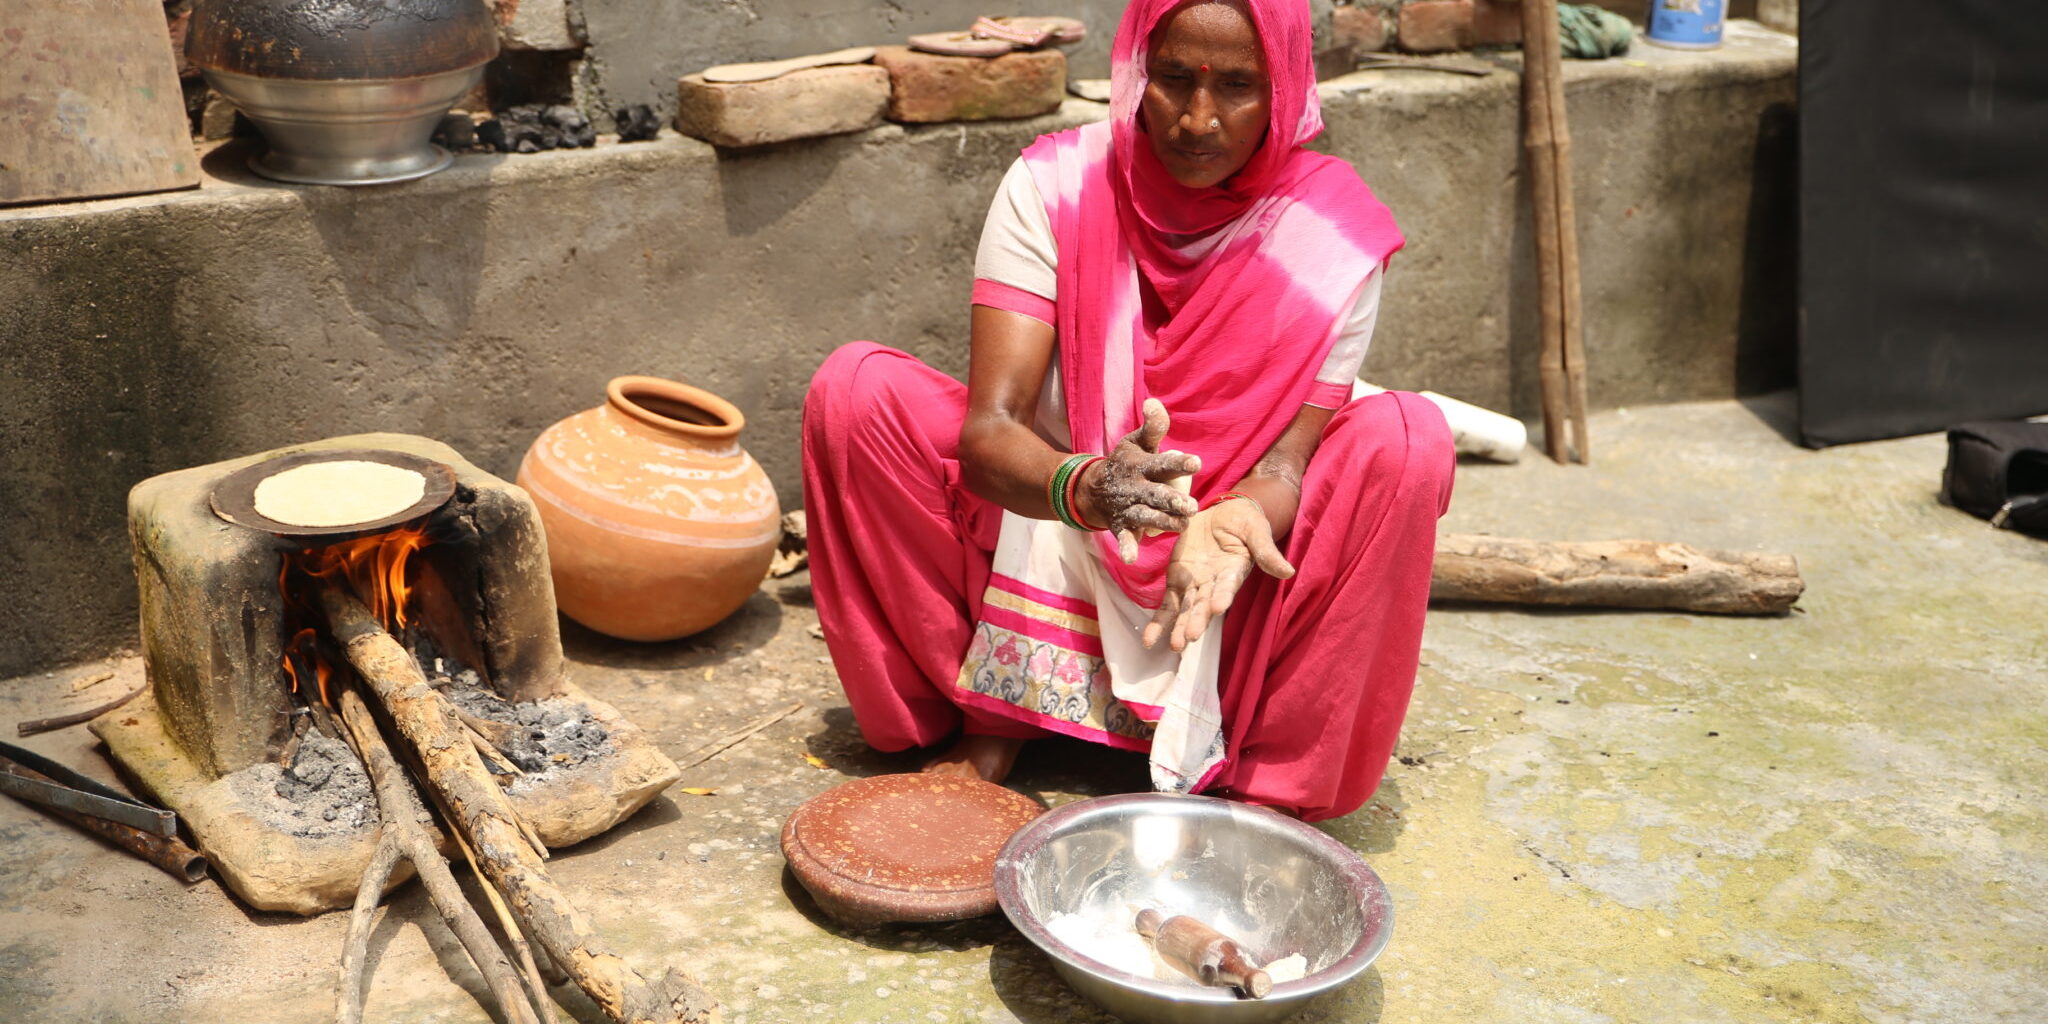 Lakshmi prepares food in her village in India